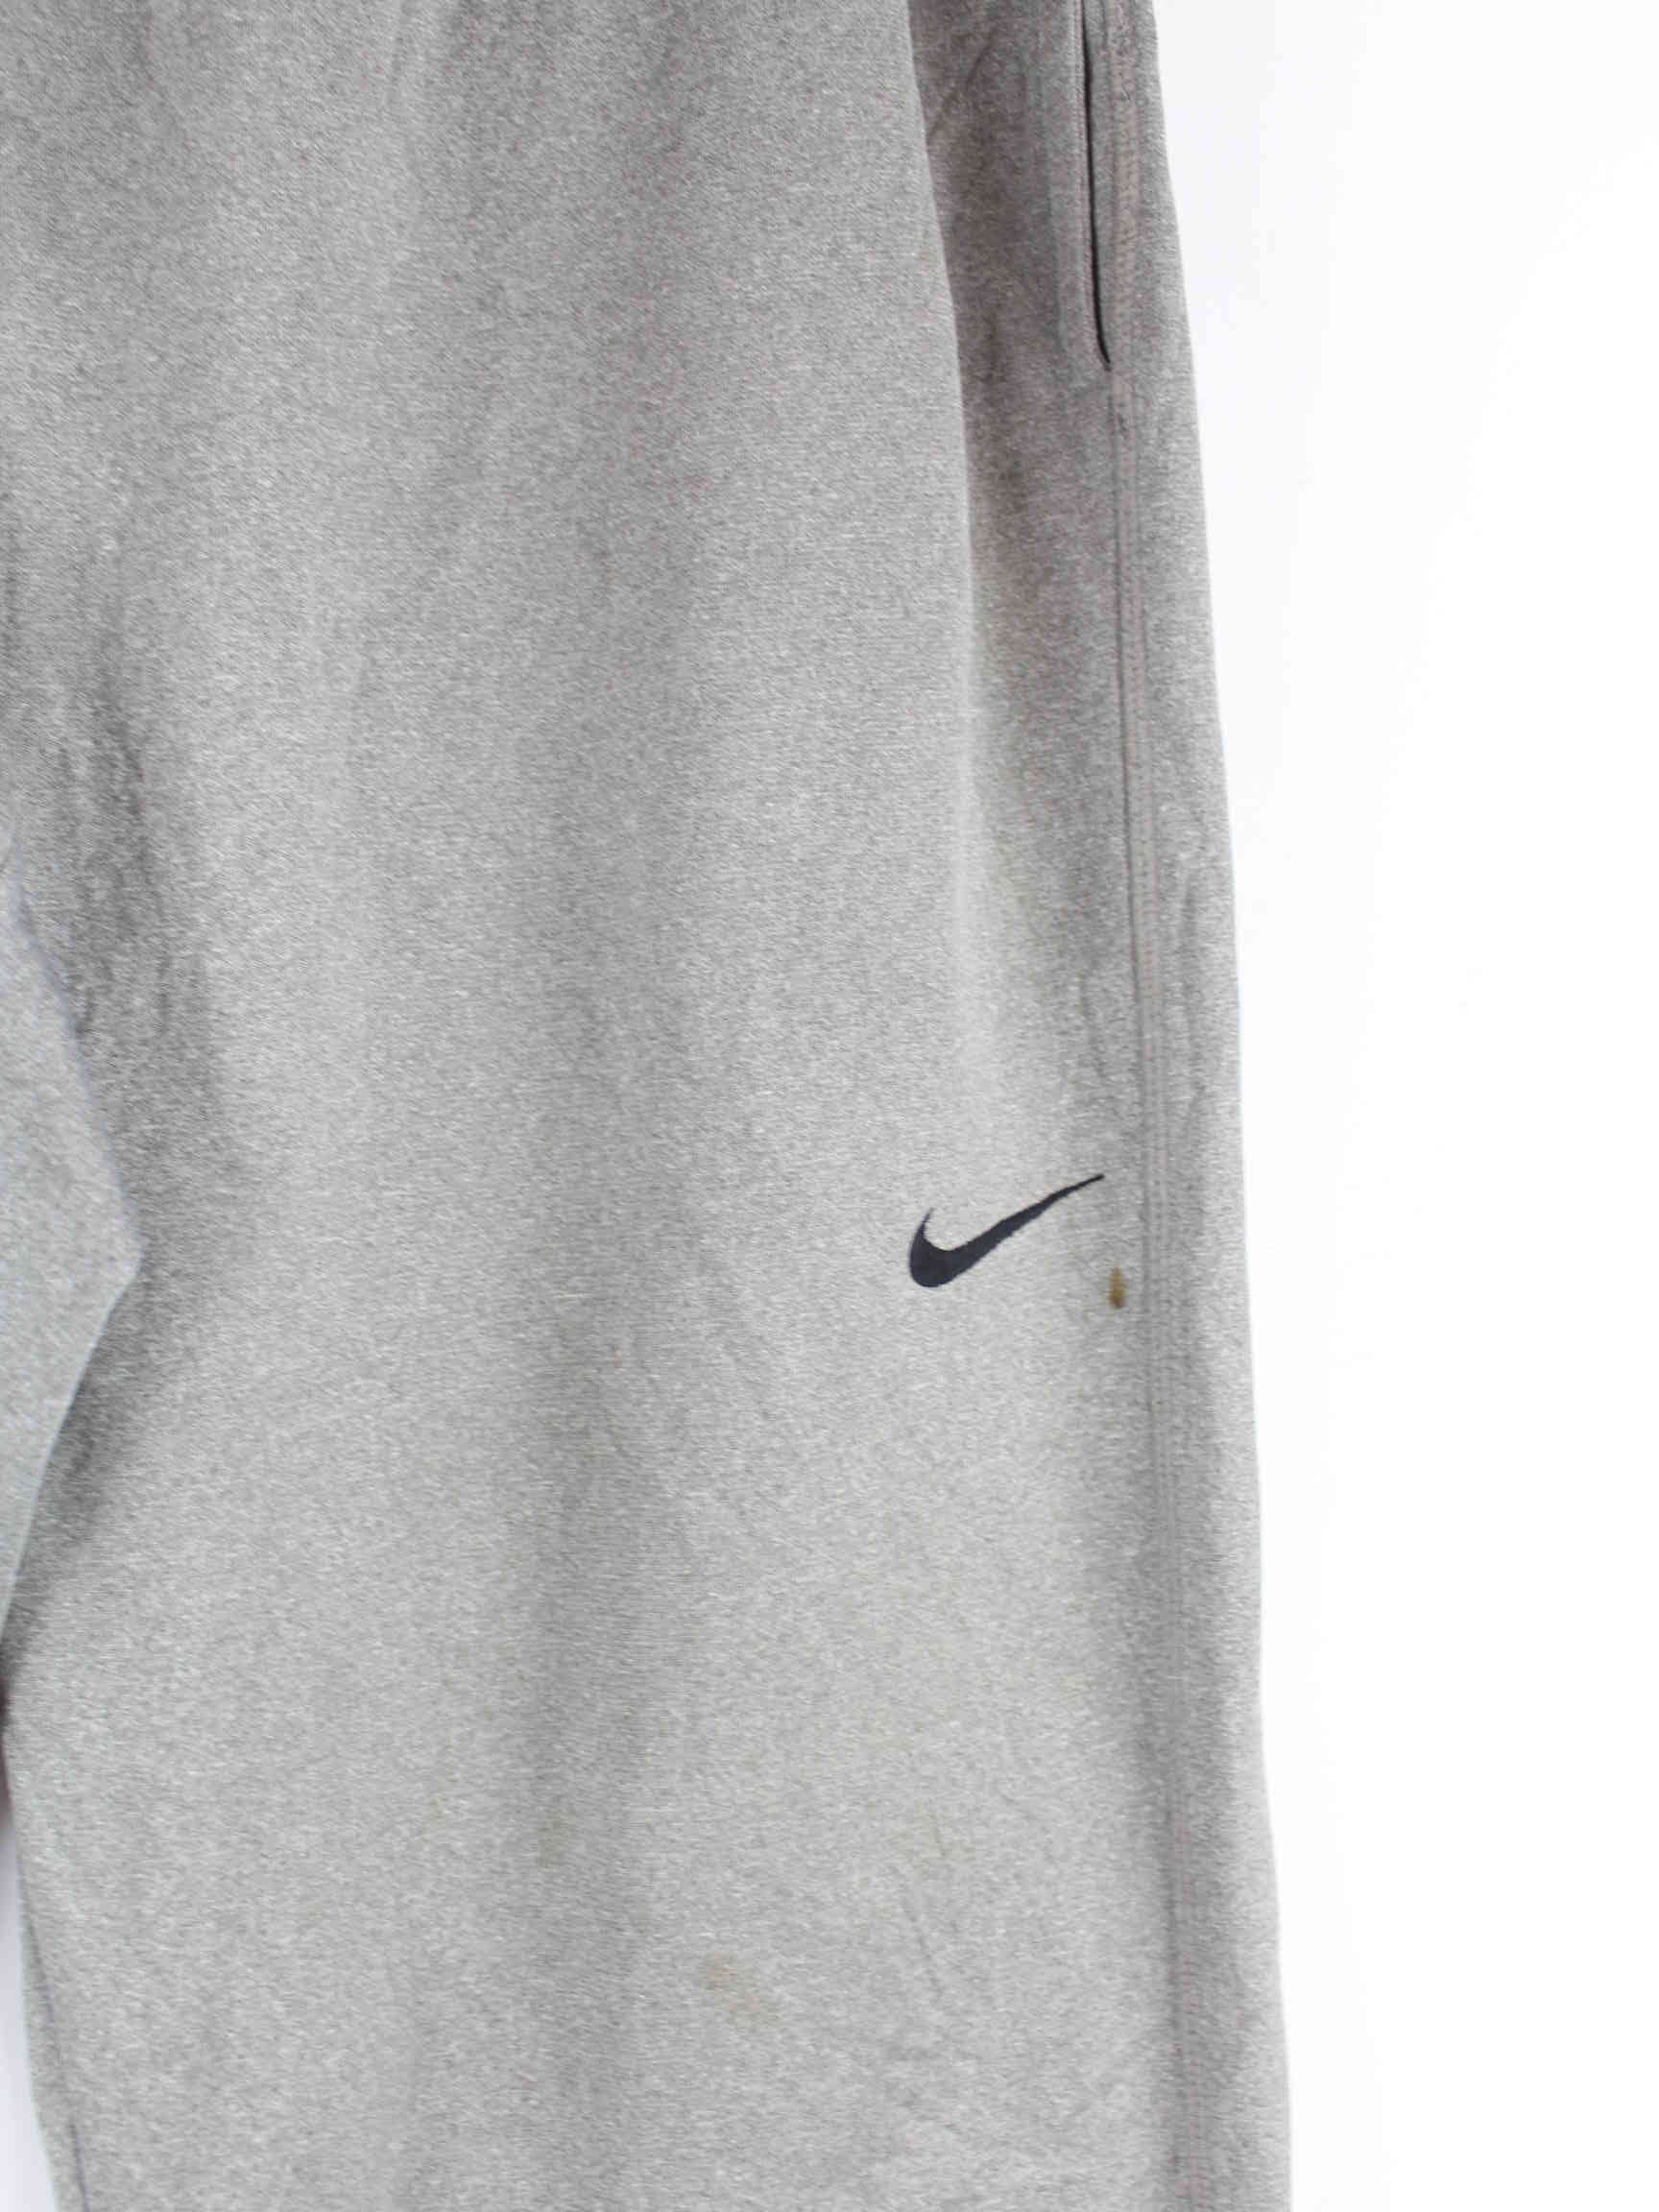 Nike Therma Fit Track Pants Grau L (detail image 1)